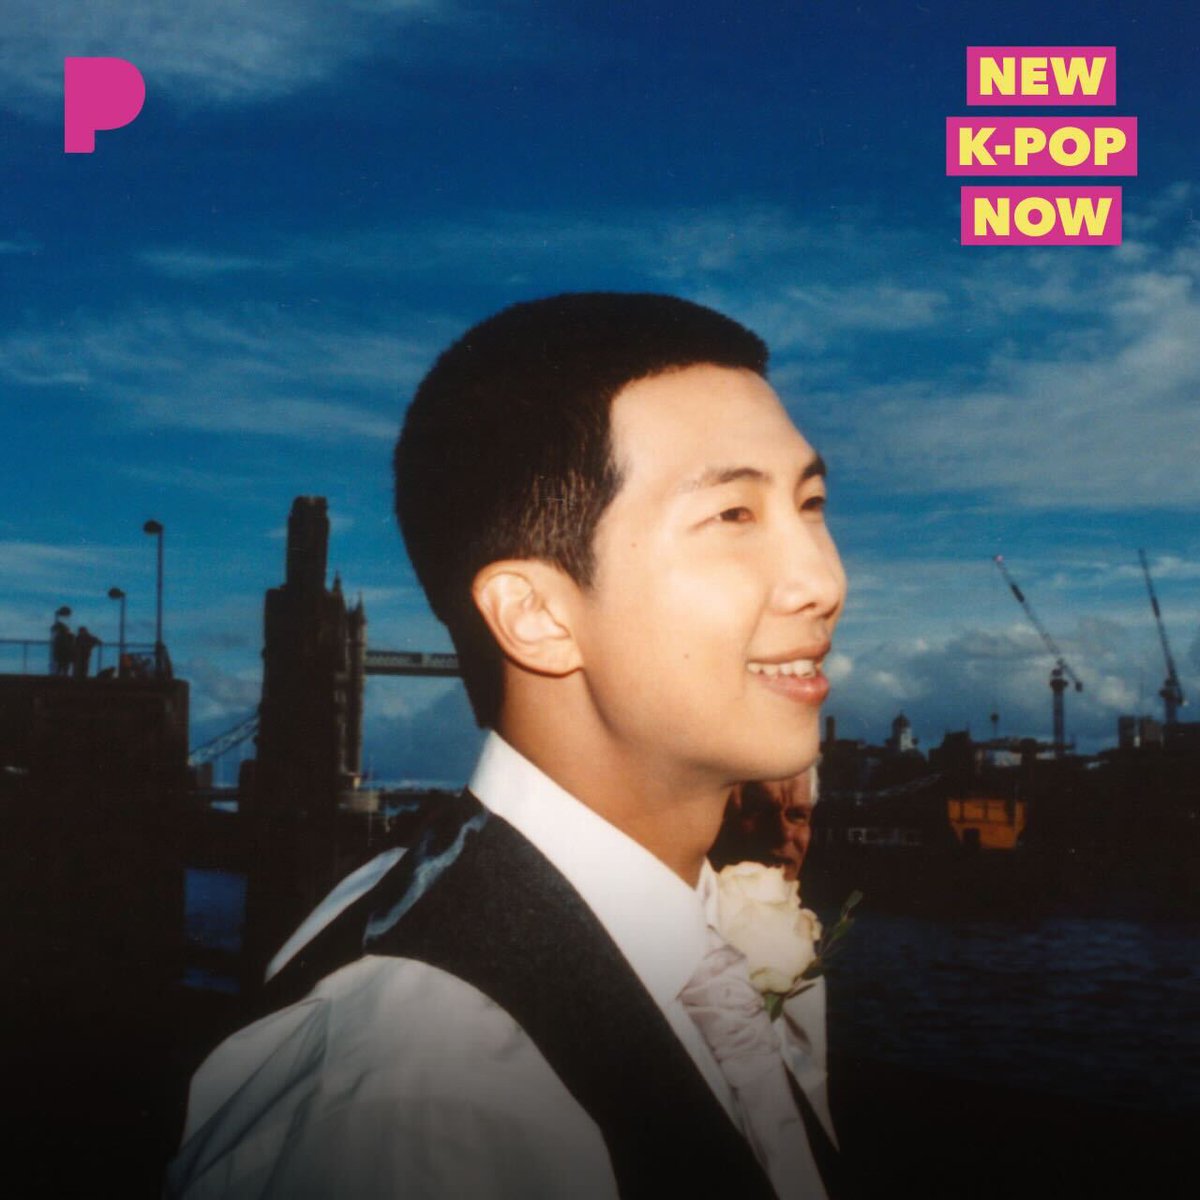 Check out 'LOST!' on New K-Pop @pandoramusic! 🎧 pandora.com/genre/new-k-pop #RM #RM_LOST #RightPlaceWrongPerson